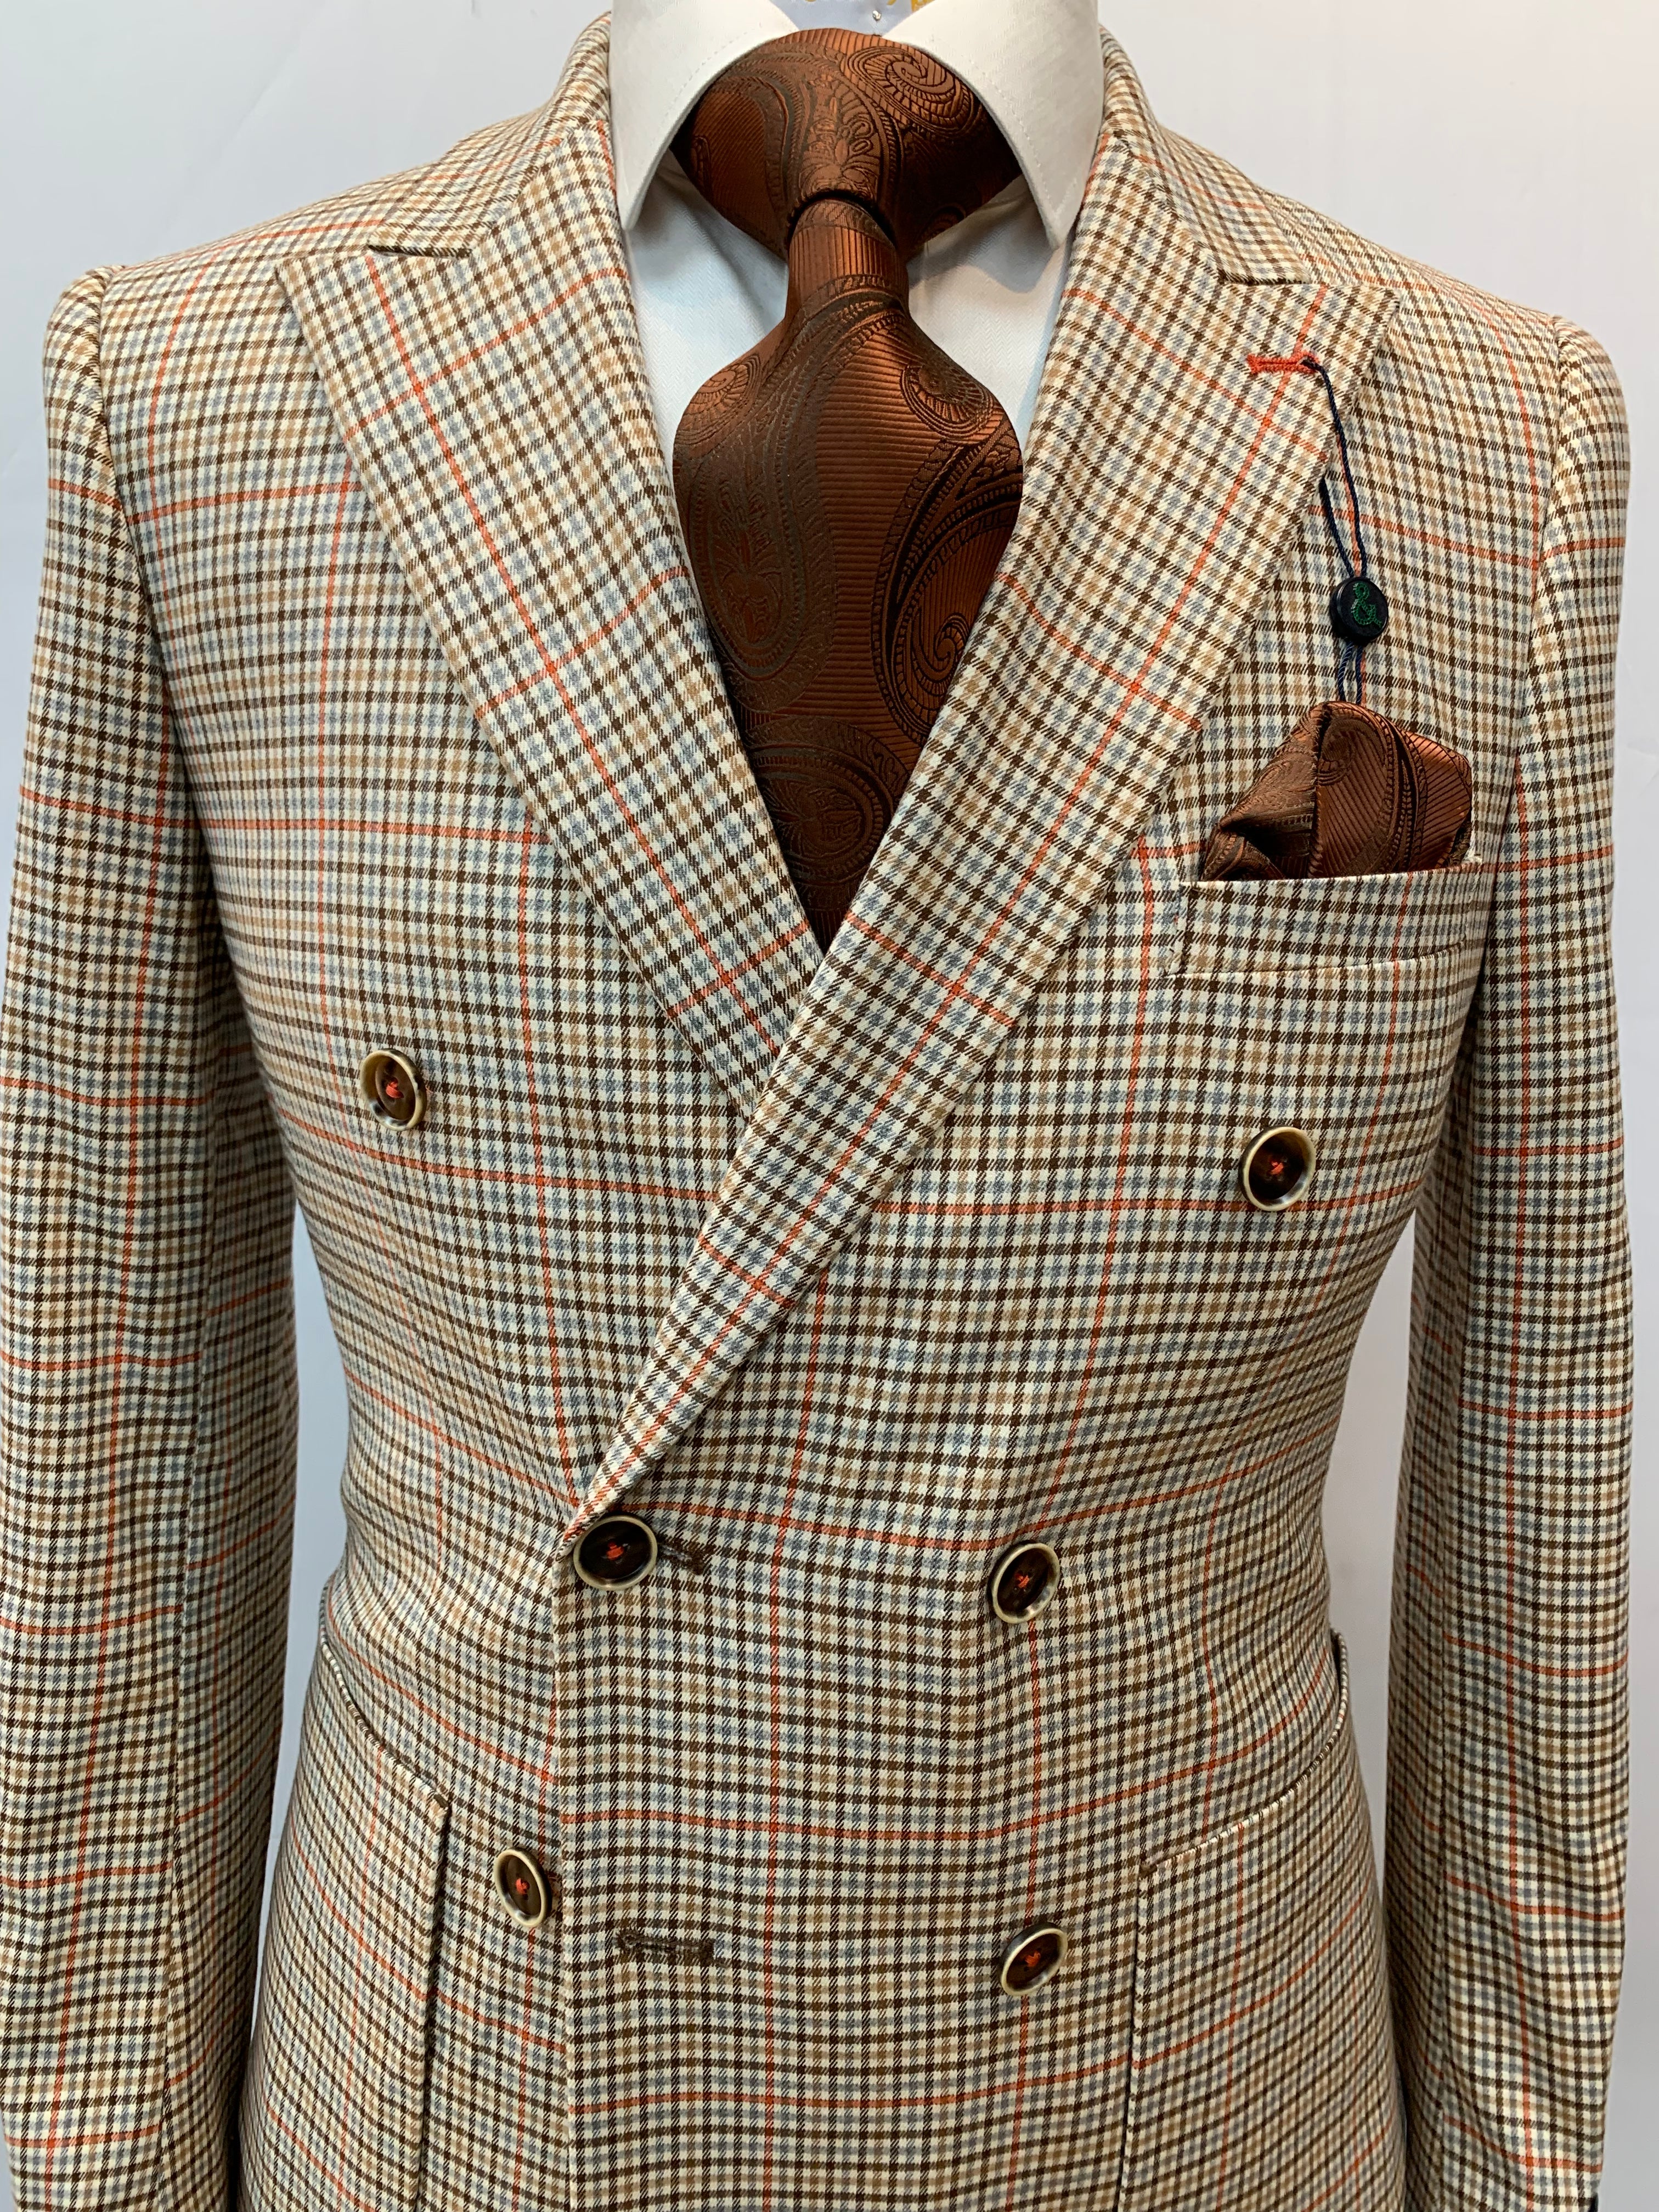 Paisley & Gray Slim Fit Brown Plaid Suit